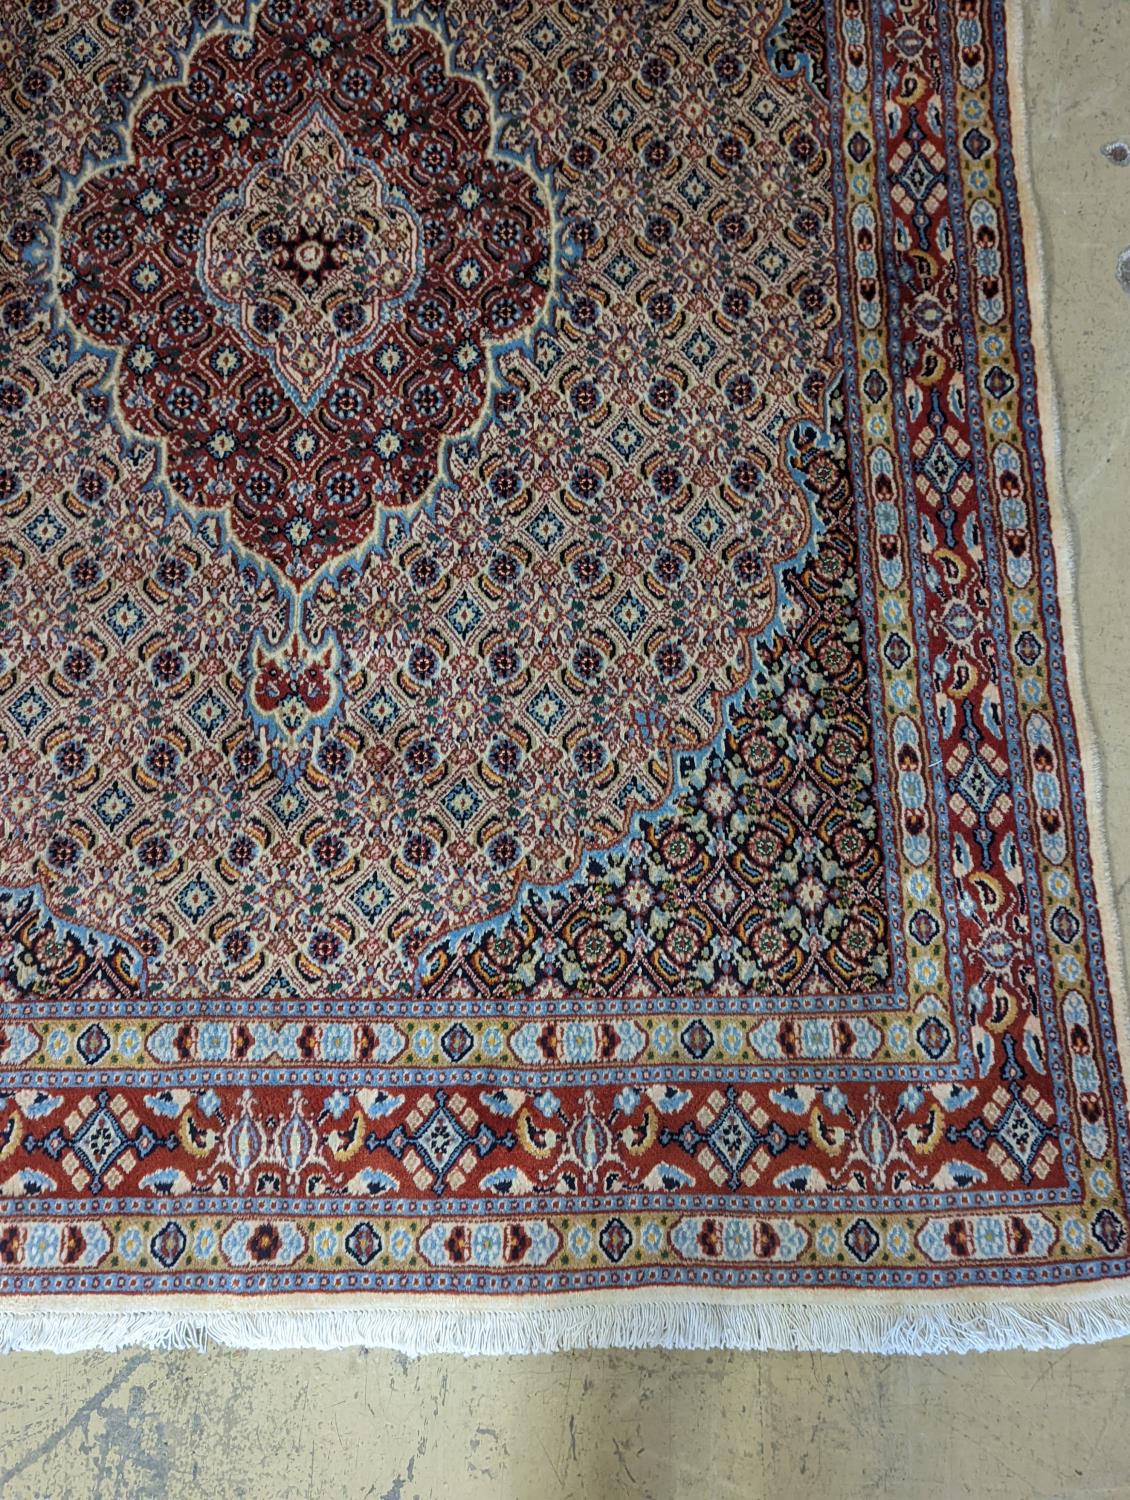 A Mood carpet, 200 x 150cm - Image 5 of 5